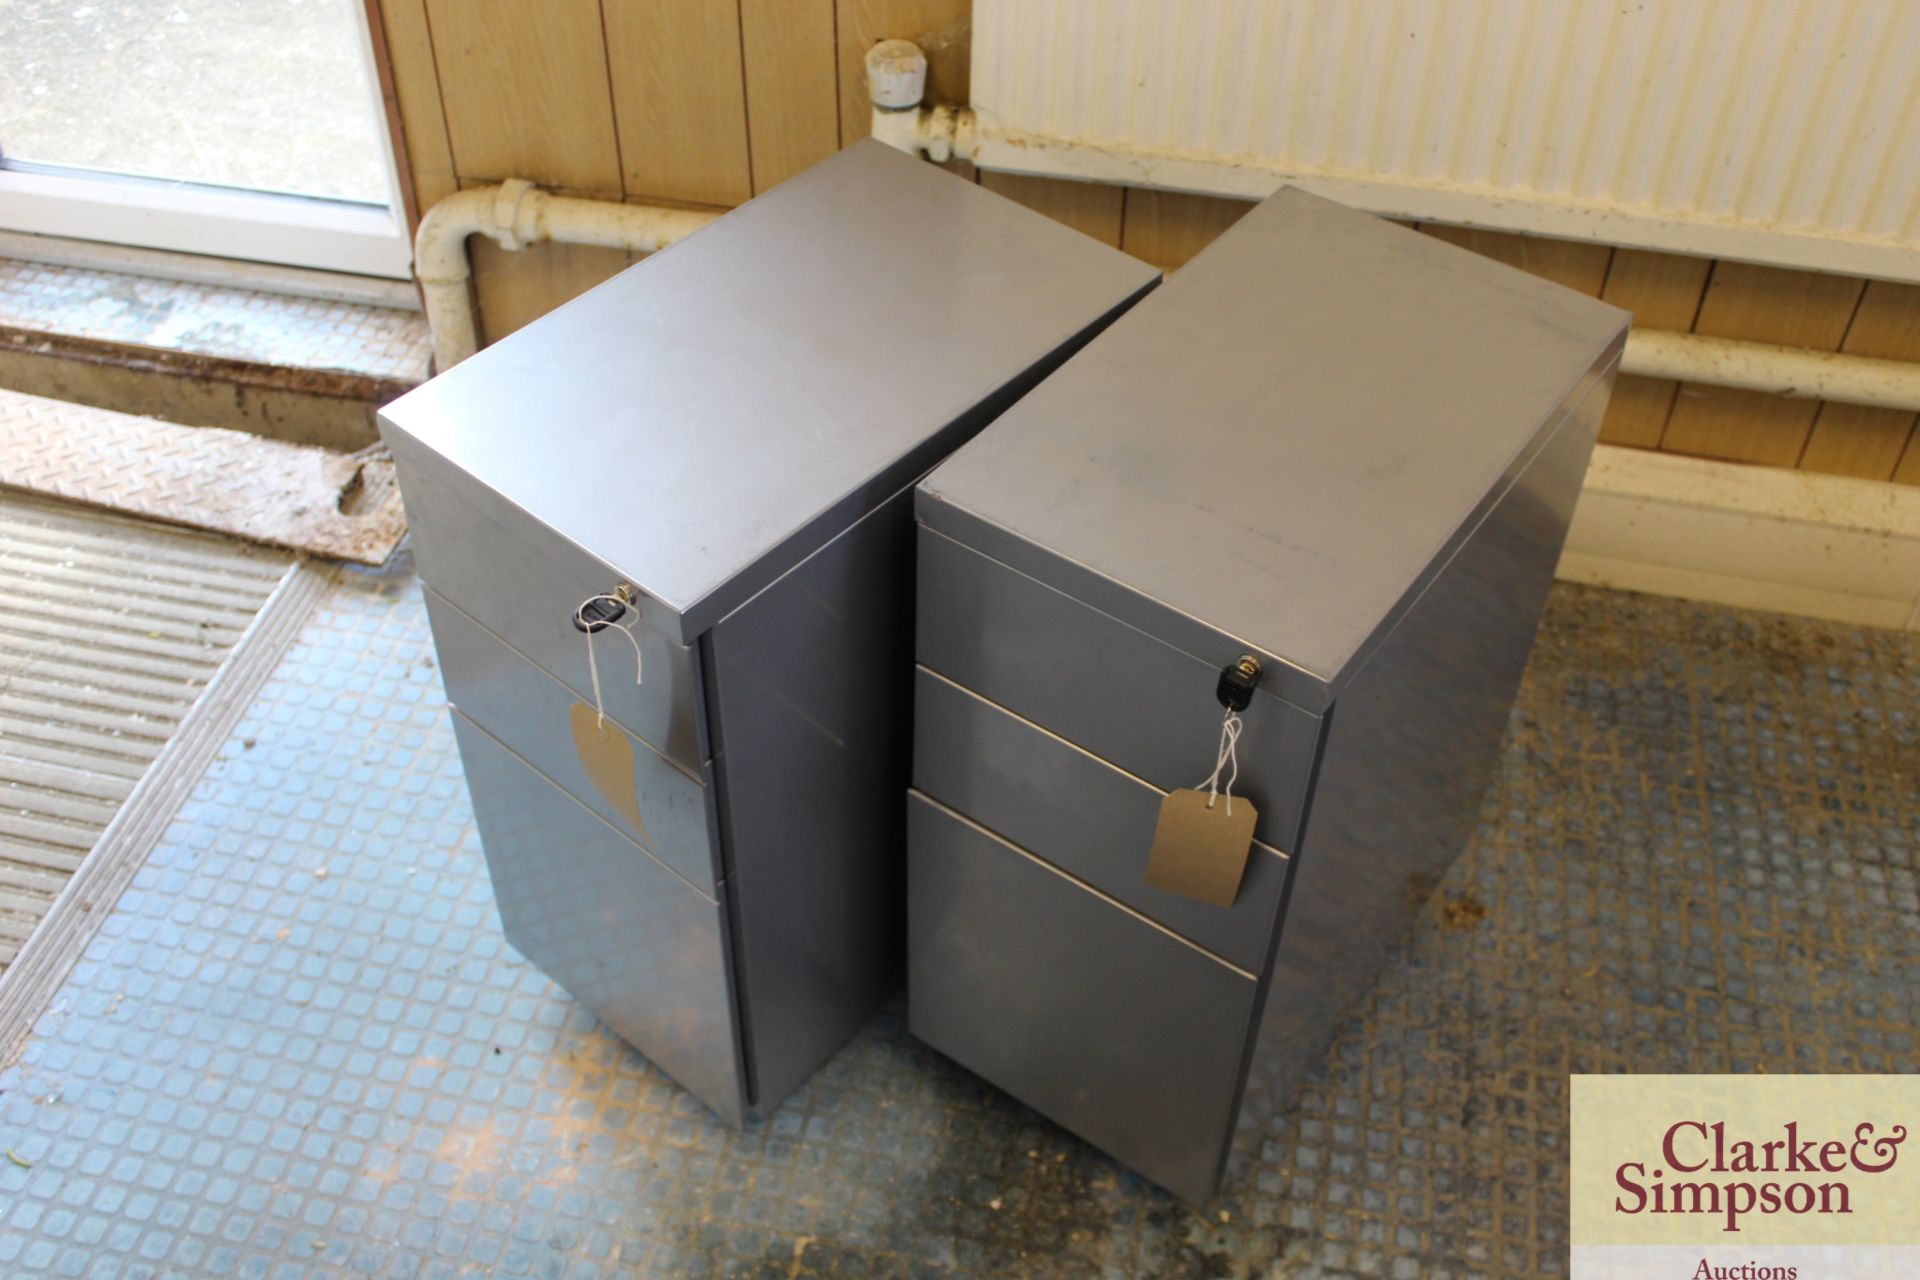 2x grey metal 3 drawer desk pedestals. With keys.